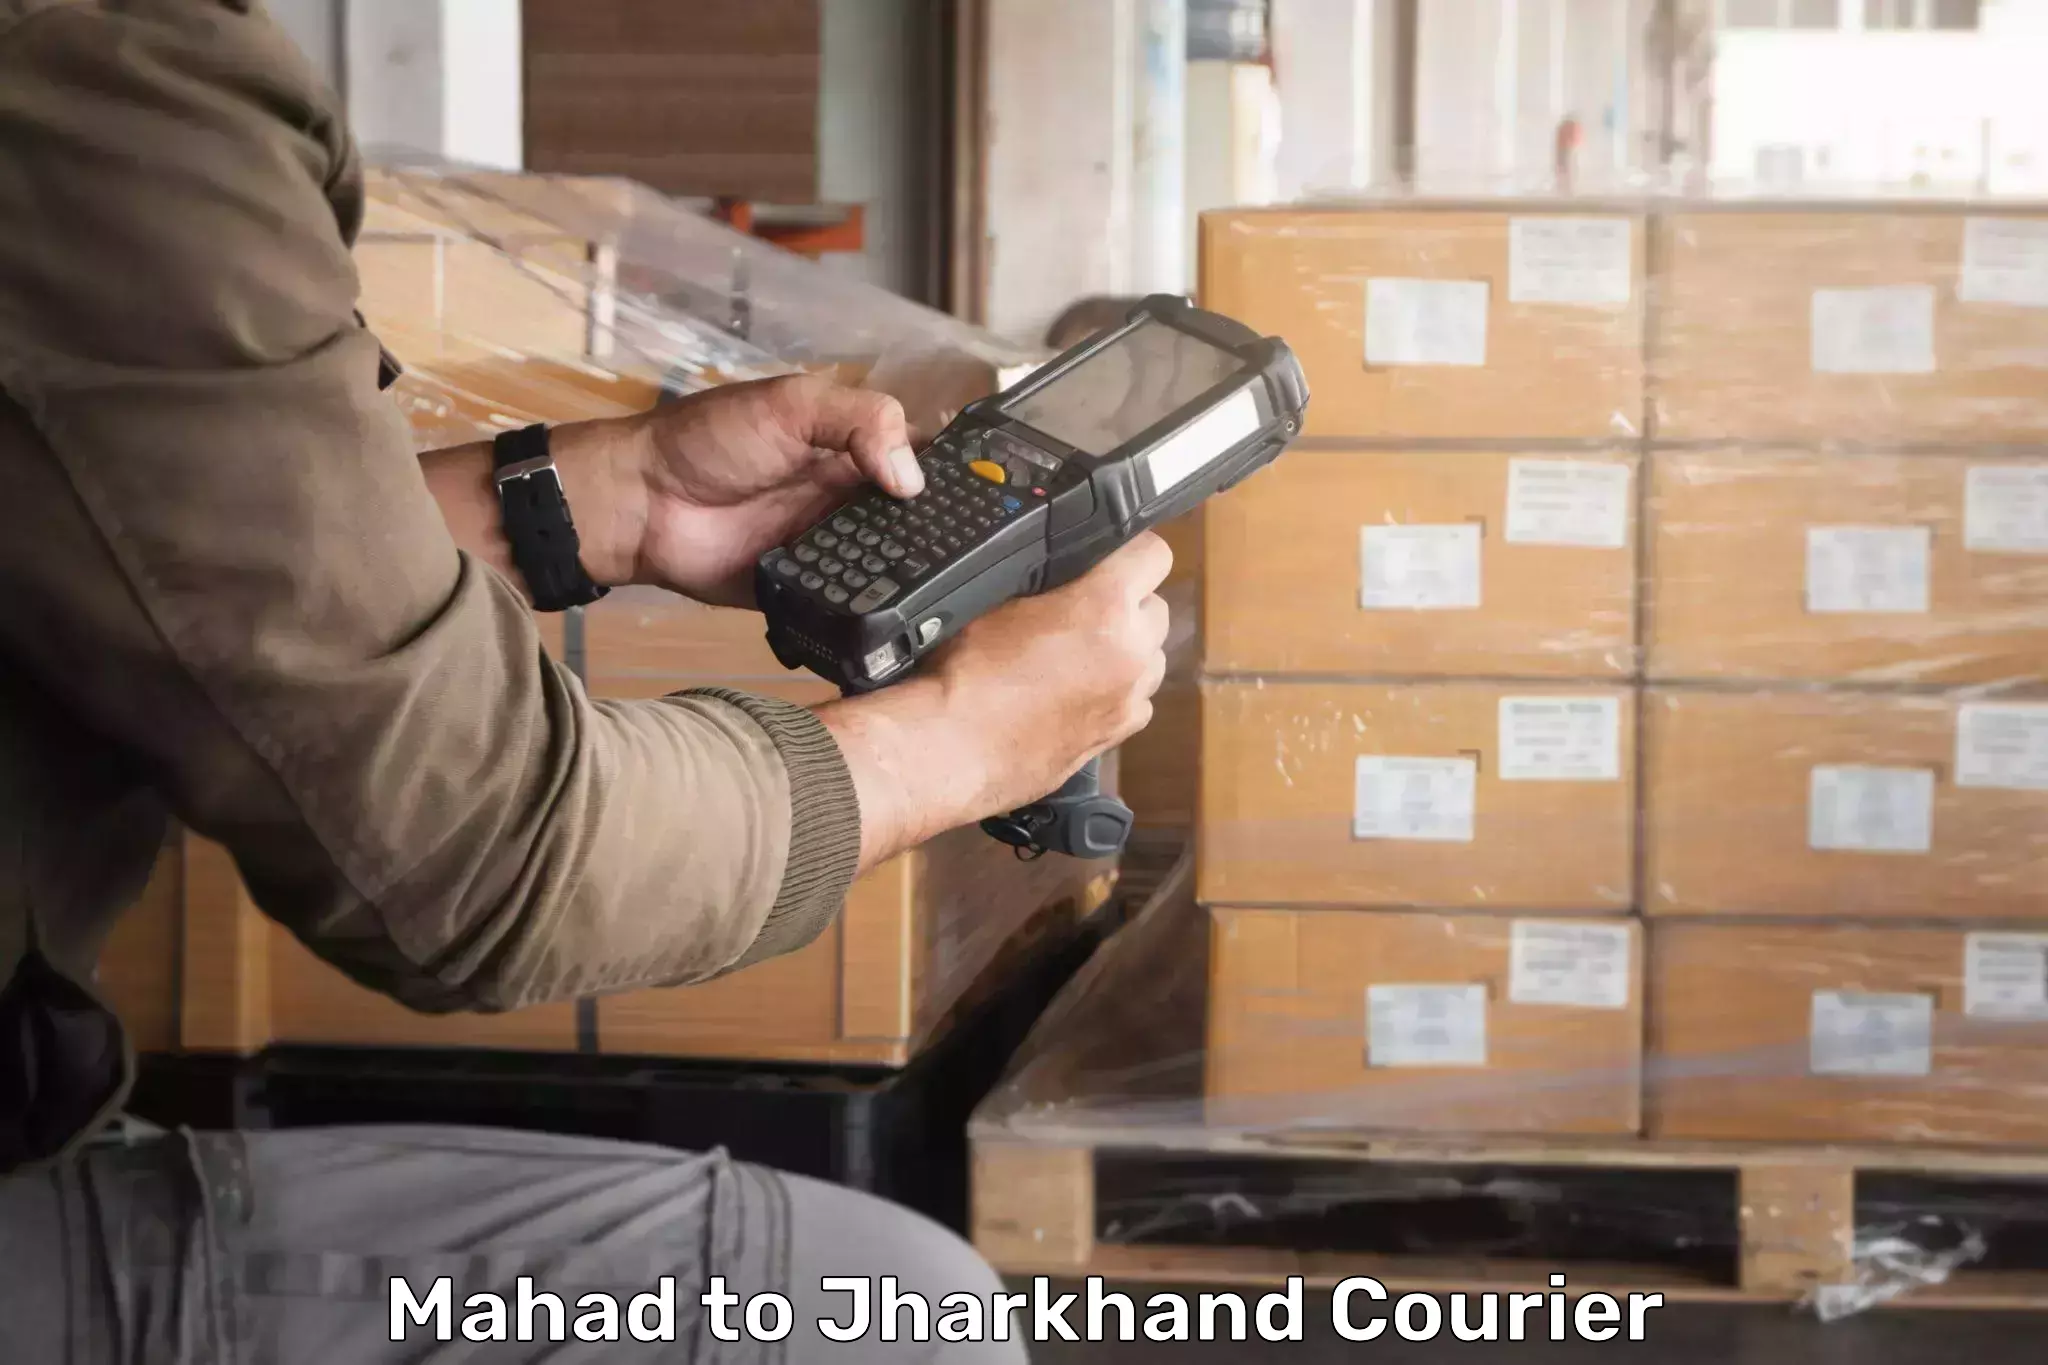 Express delivery capabilities Mahad to Ranchi